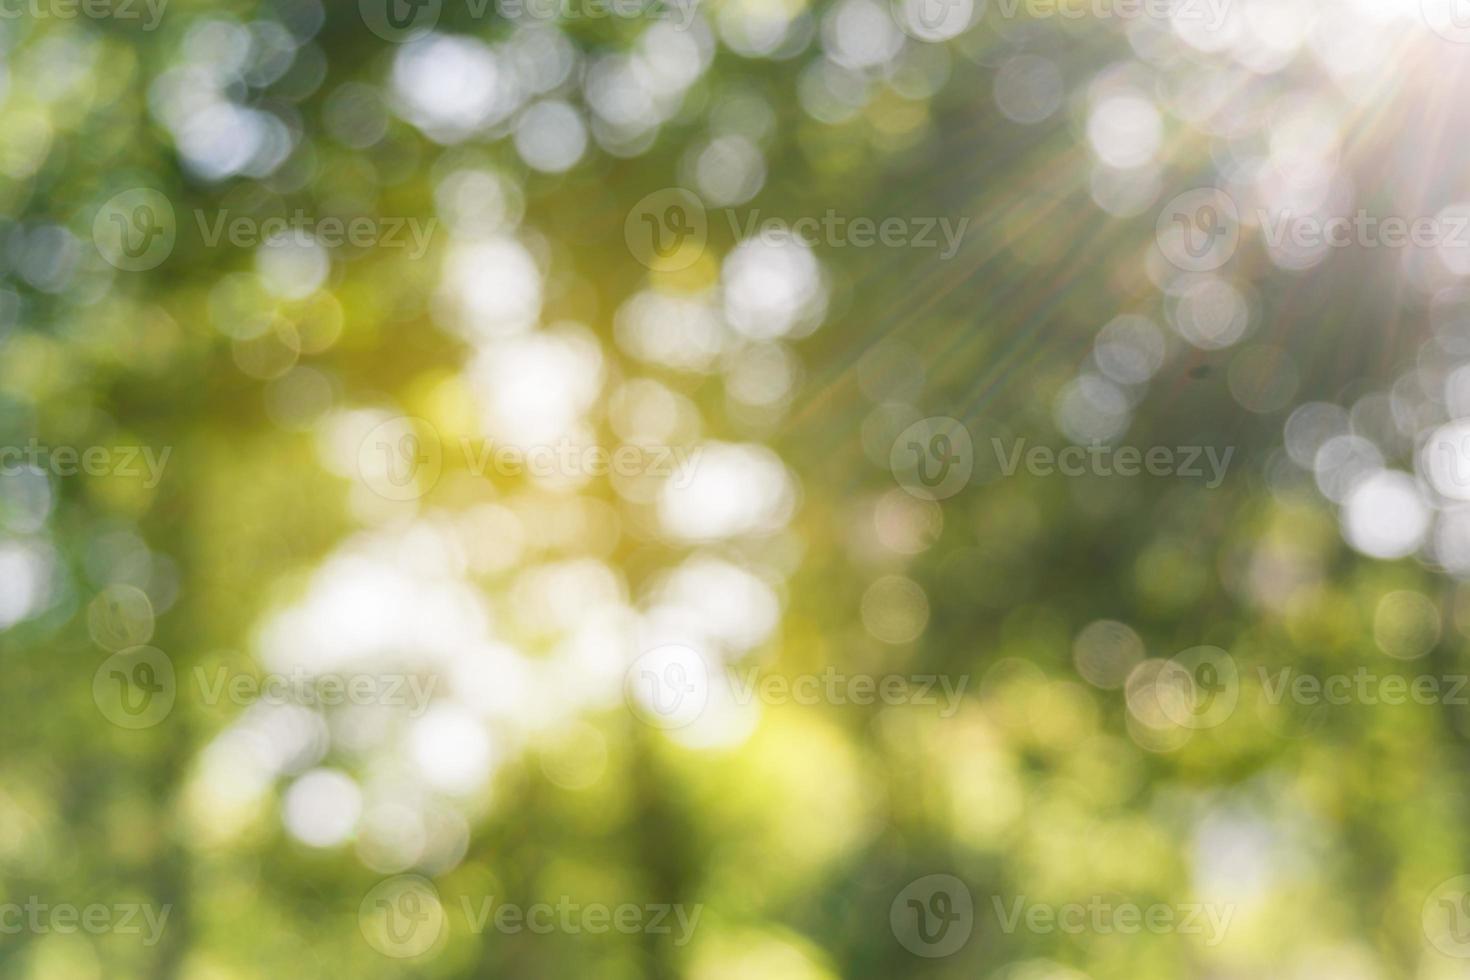 intreepupil groene bladeren in bos met zonnestraal, abstracte bokeh achtergrond. foto